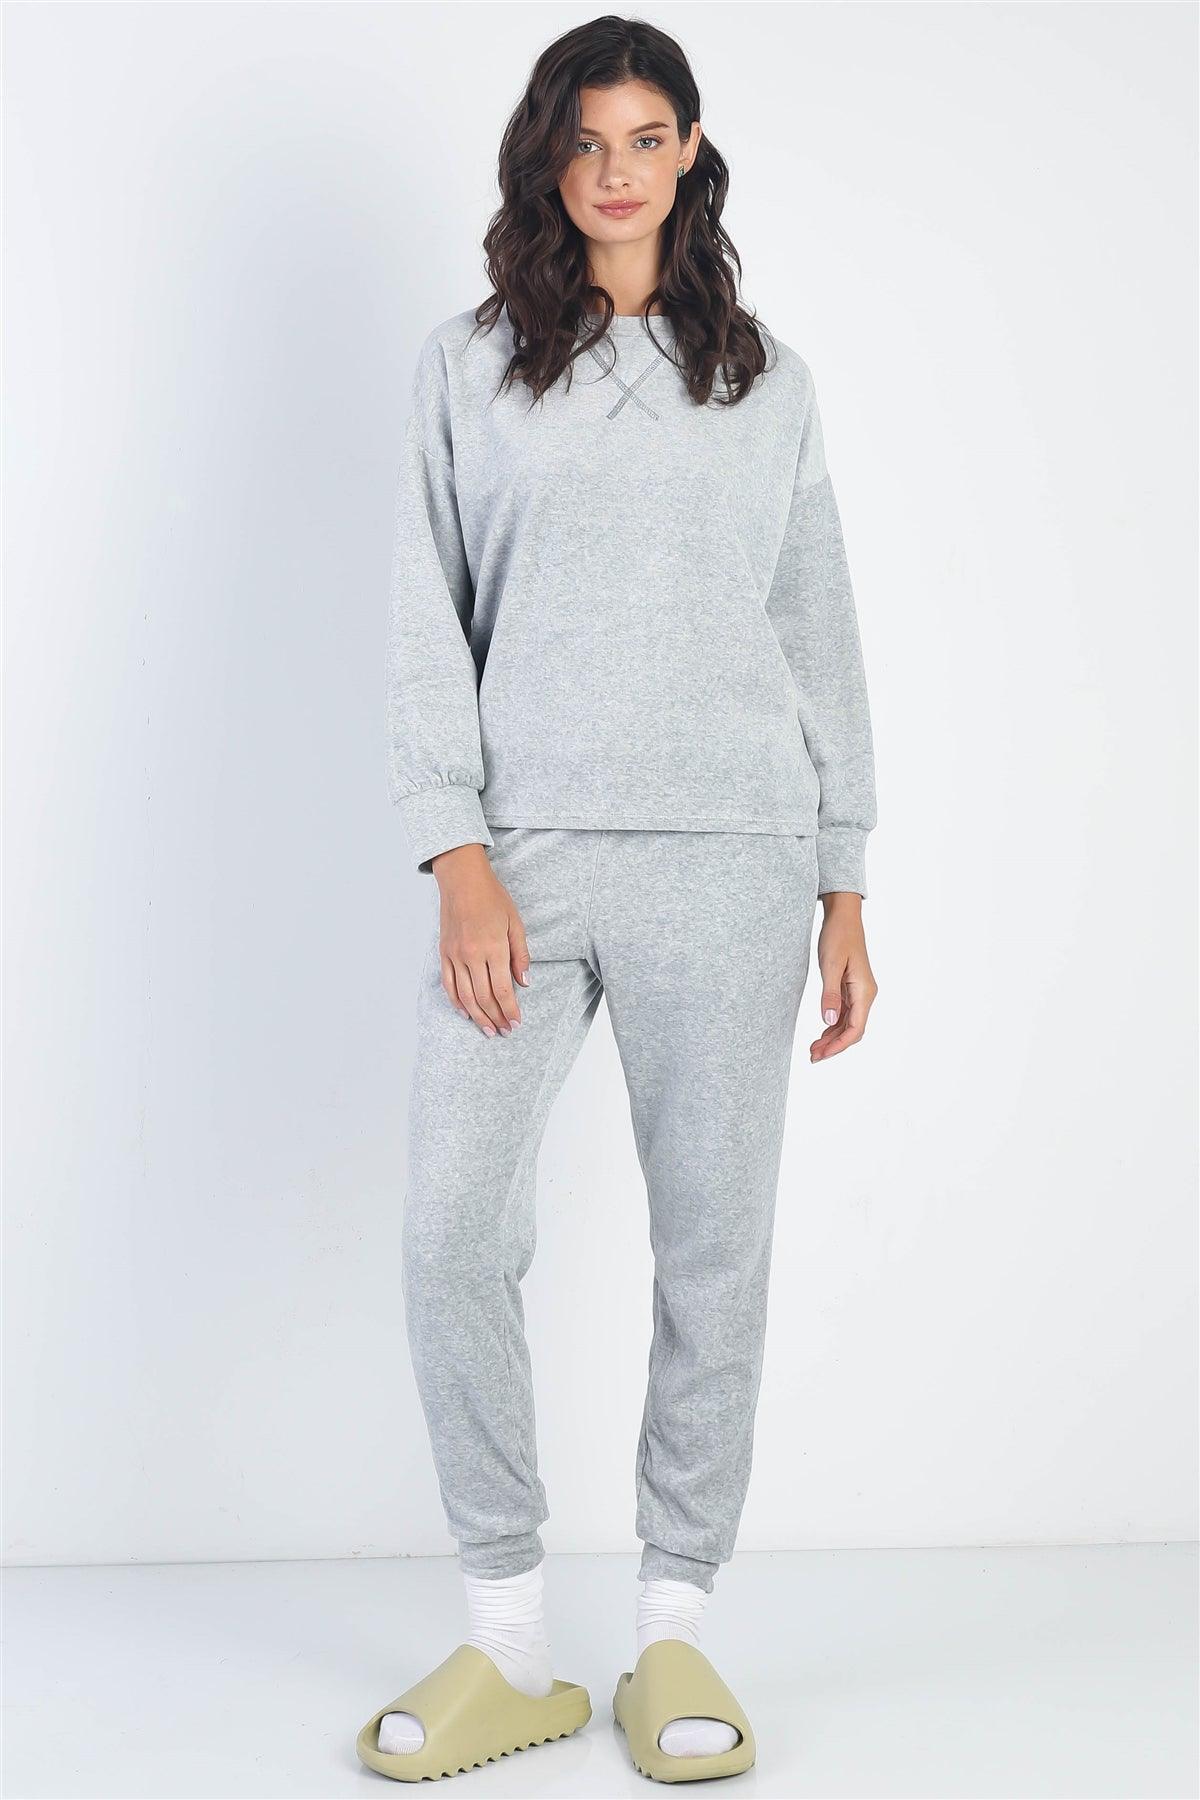 Heather Grey Velour Cotton Blend Long Sleeve Sweater & Pant Set  /1-1-1